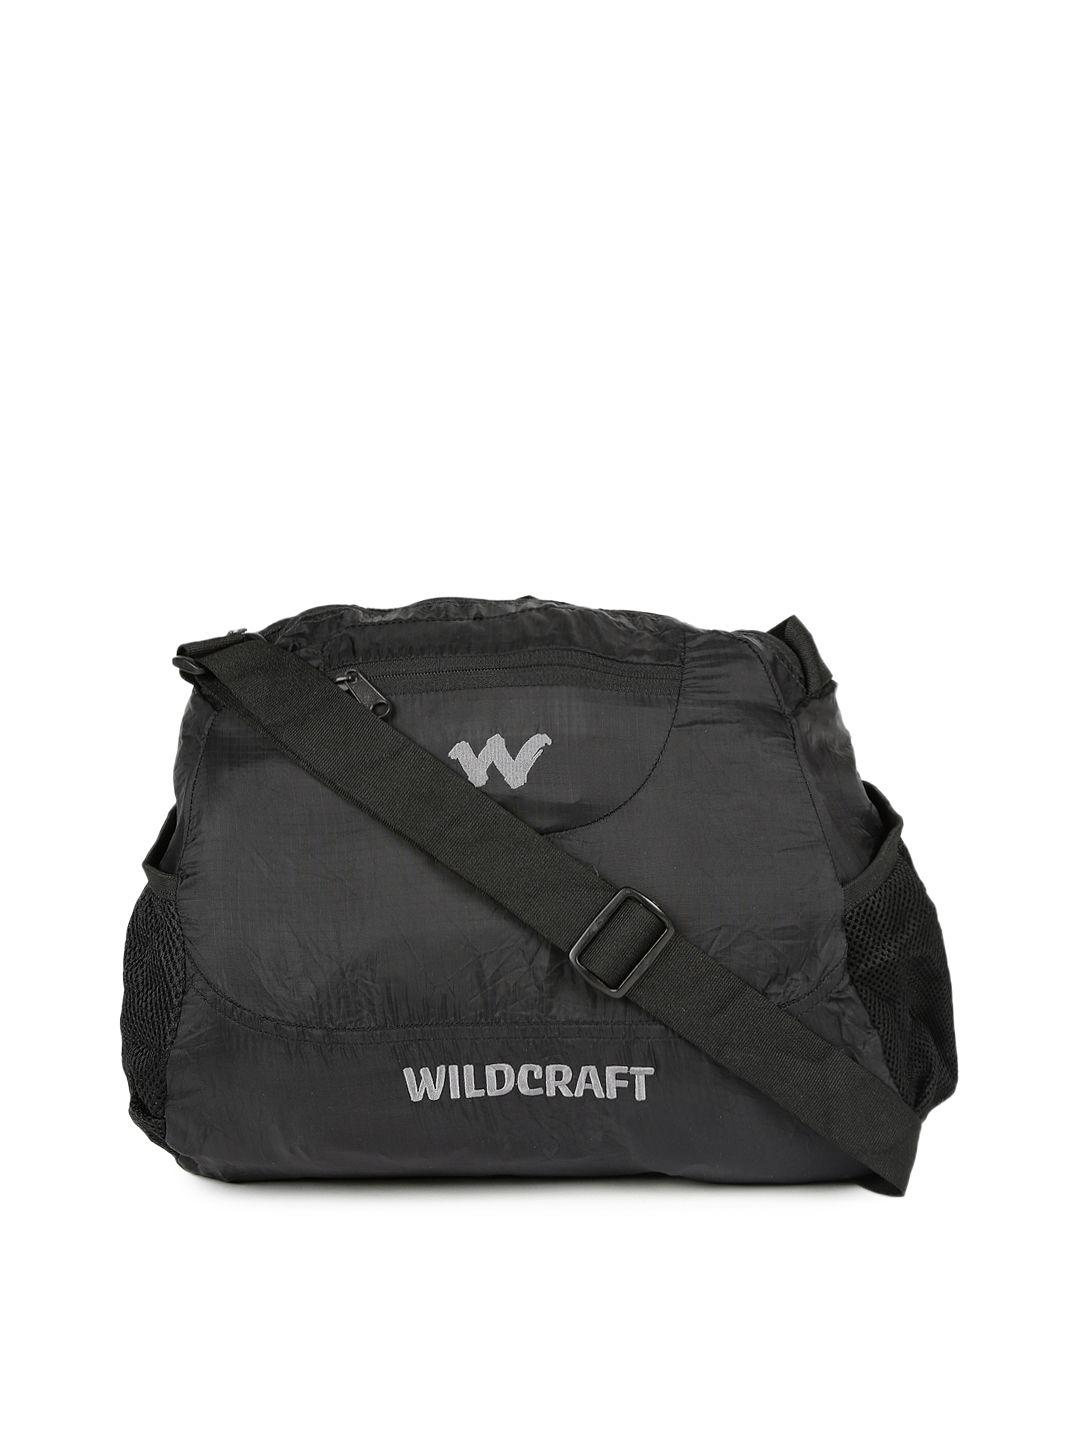 wildcraft men black pac n go messenger bag